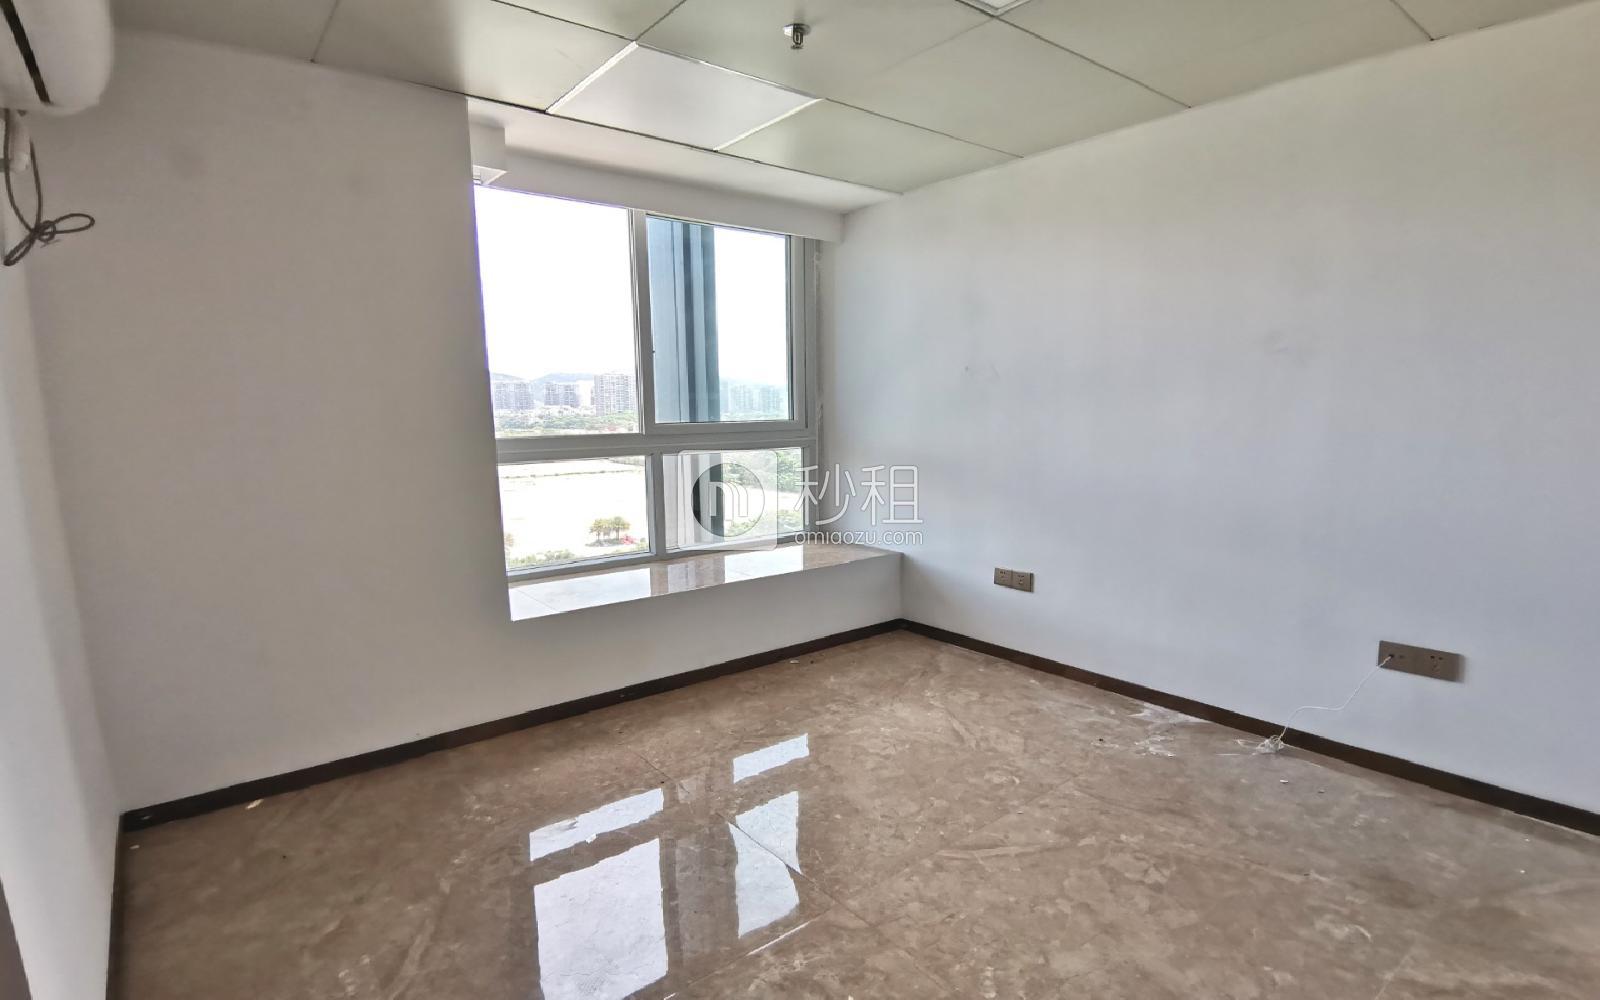 NEO大厦写字楼出租146平米精装办公室150元/m².月